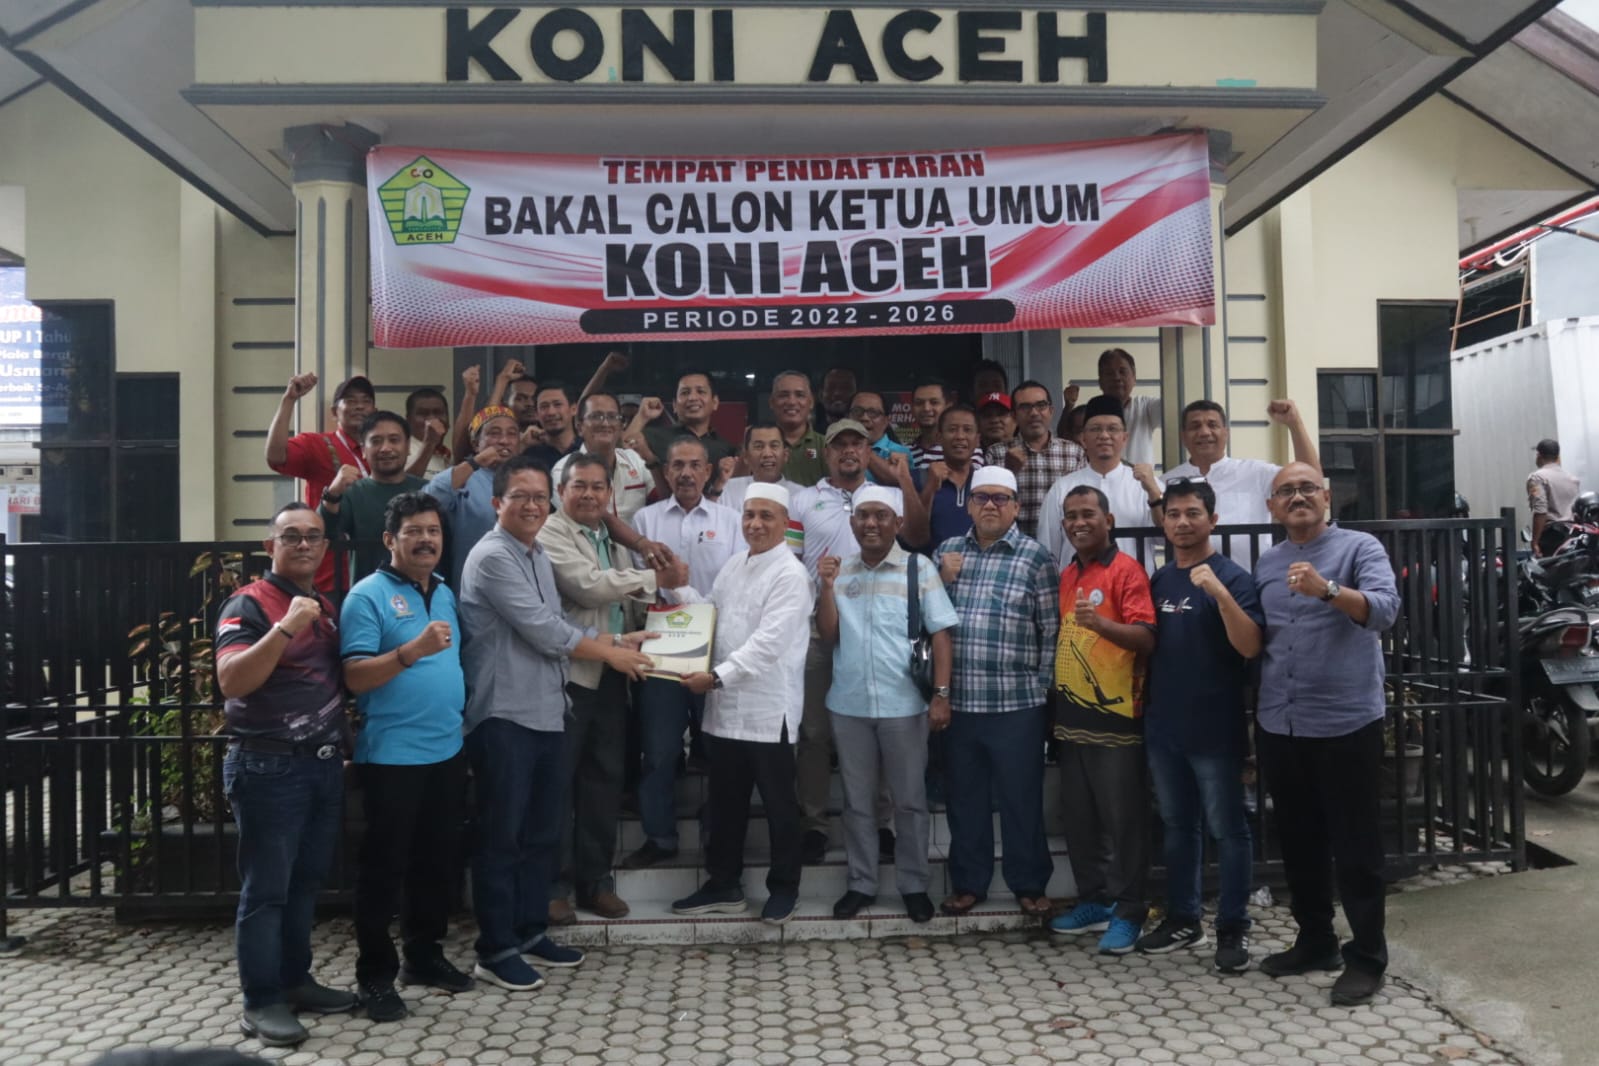 Abu Razak Resmi Mendaftar Balon Ketua Umum KONI Aceh